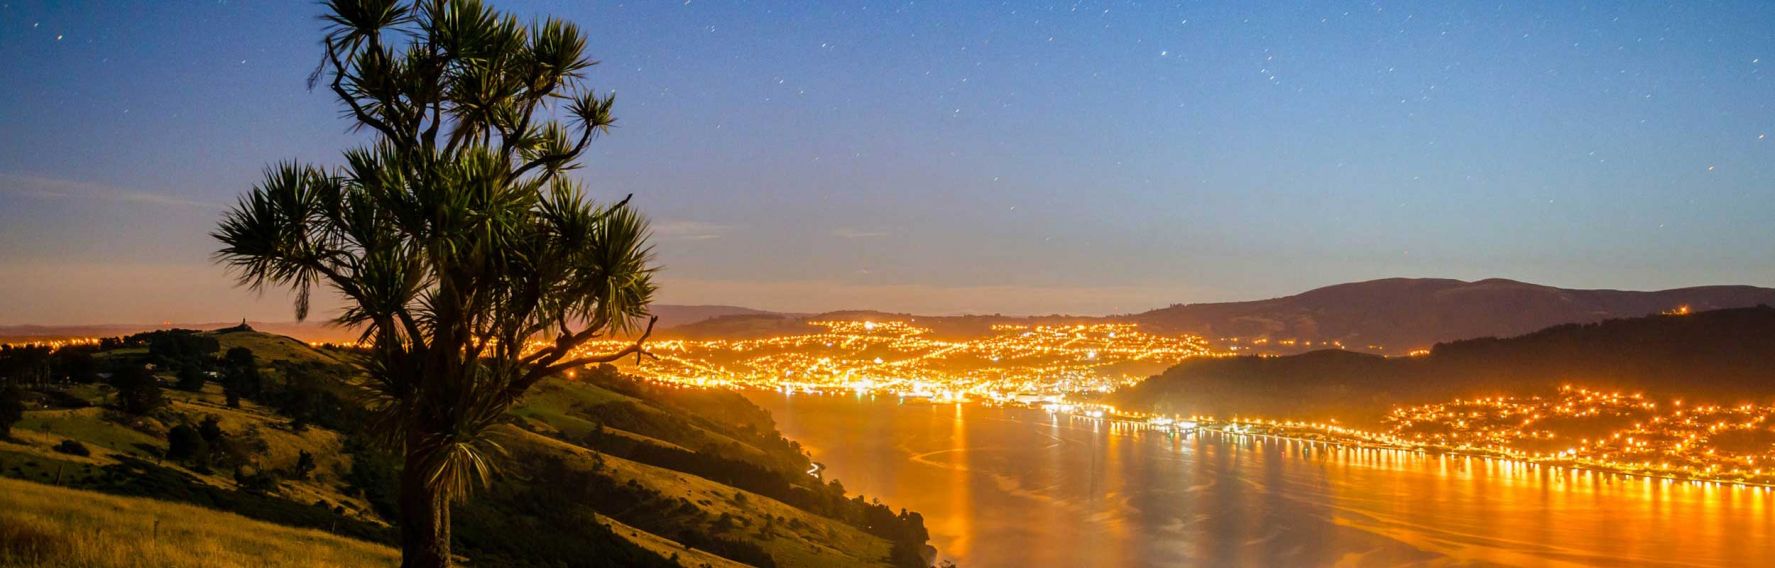 Cityscape Otago Peninsula at night